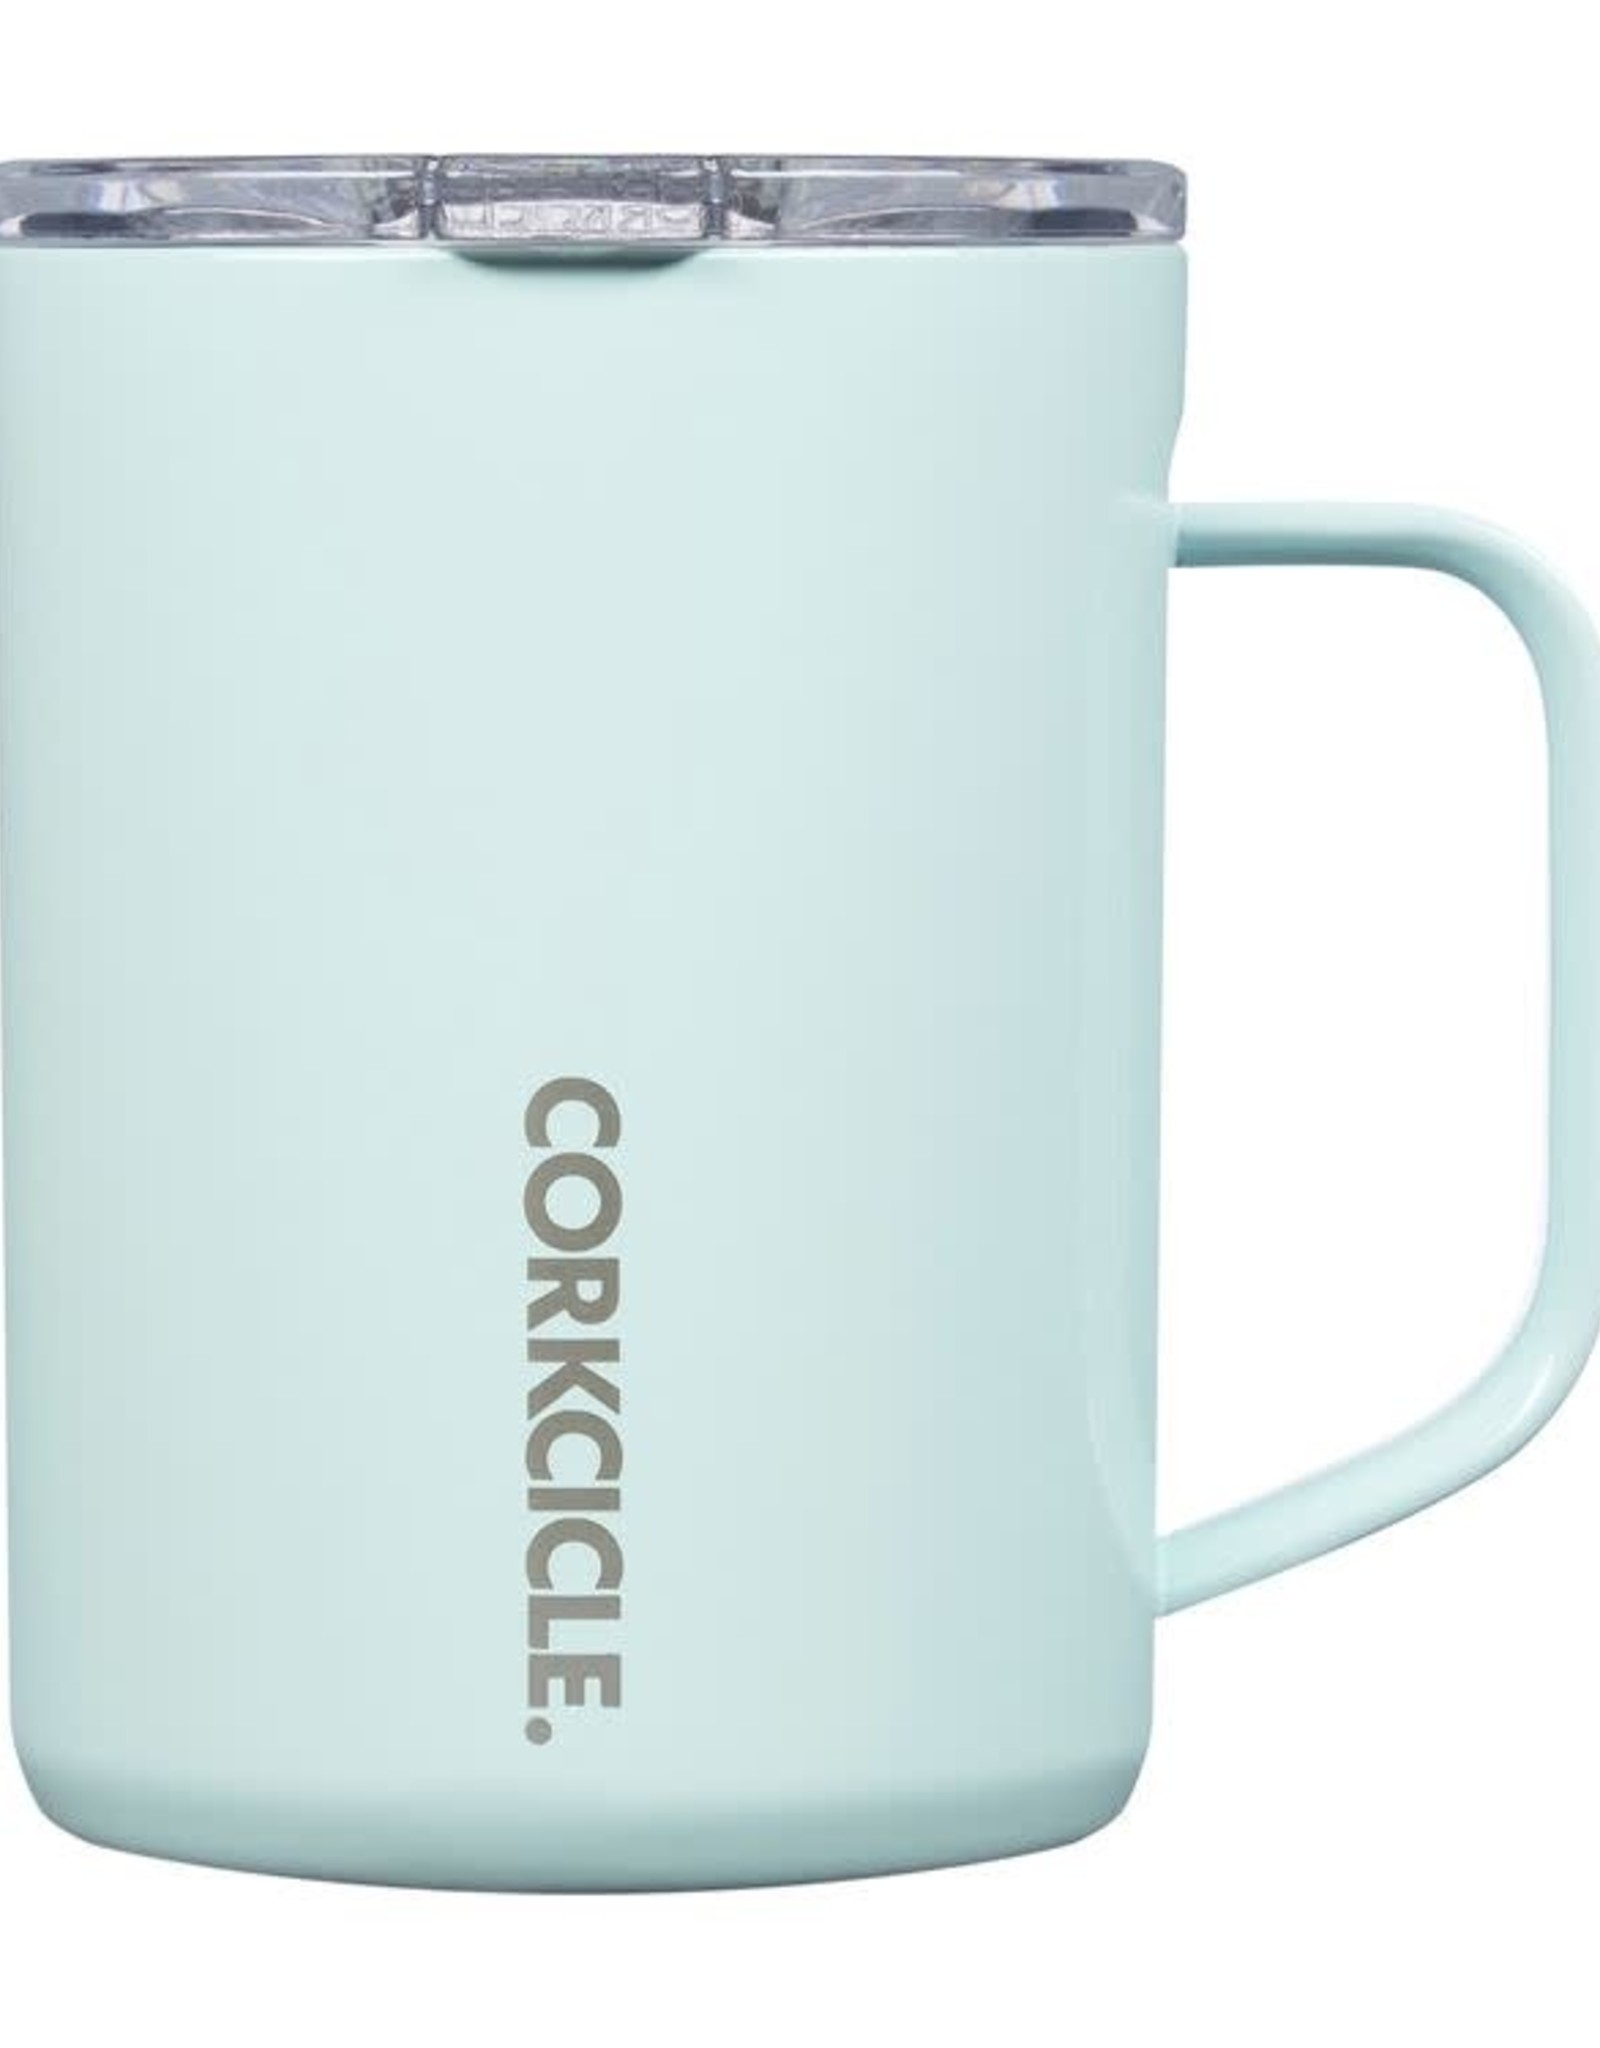 Corkcicle Mug Gloss Powder Blue